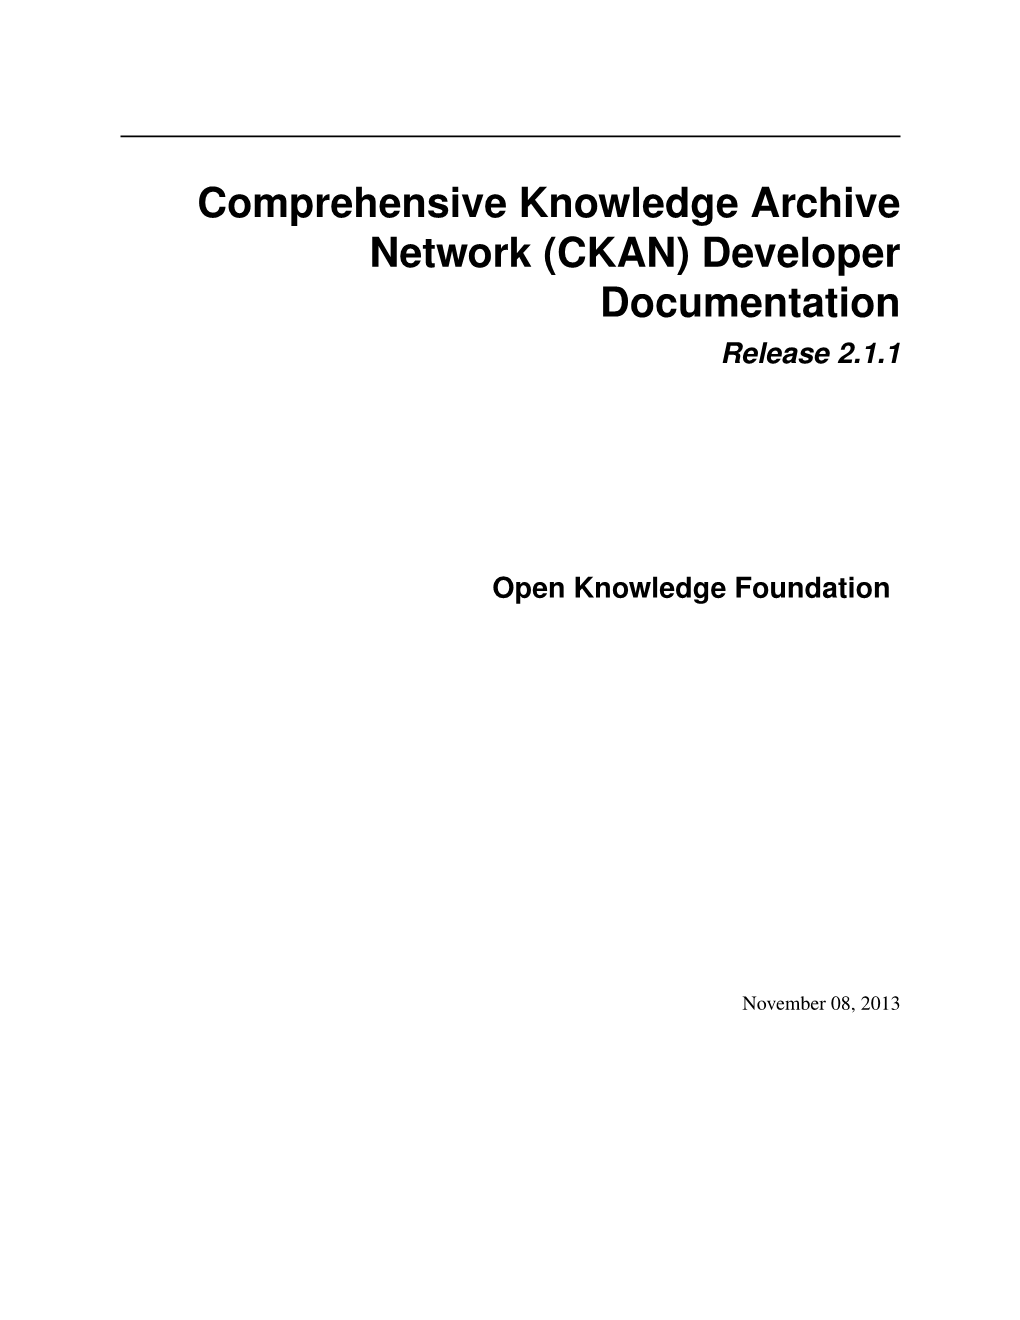 Comprehensive Knowledge Archive Network (CKAN) Developer Documentation Release 2.1.1